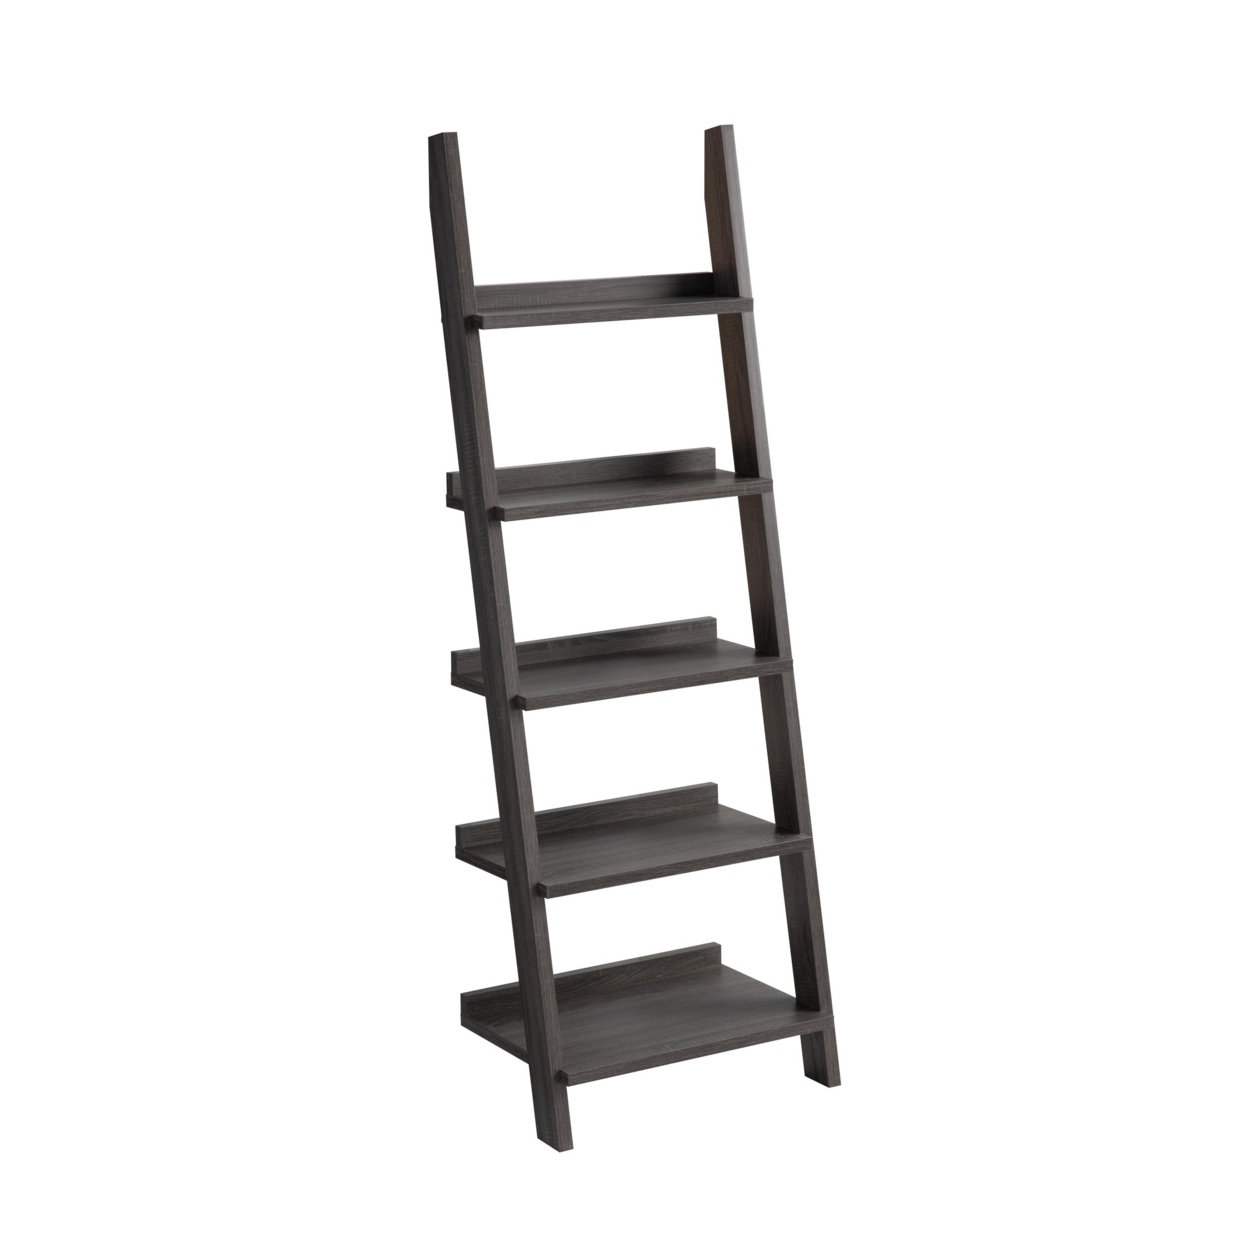 Iker 72 Inch Modern Bookcase With 7 Shelves, Ladder Style, Distressed Gray- Saltoro Sherpi